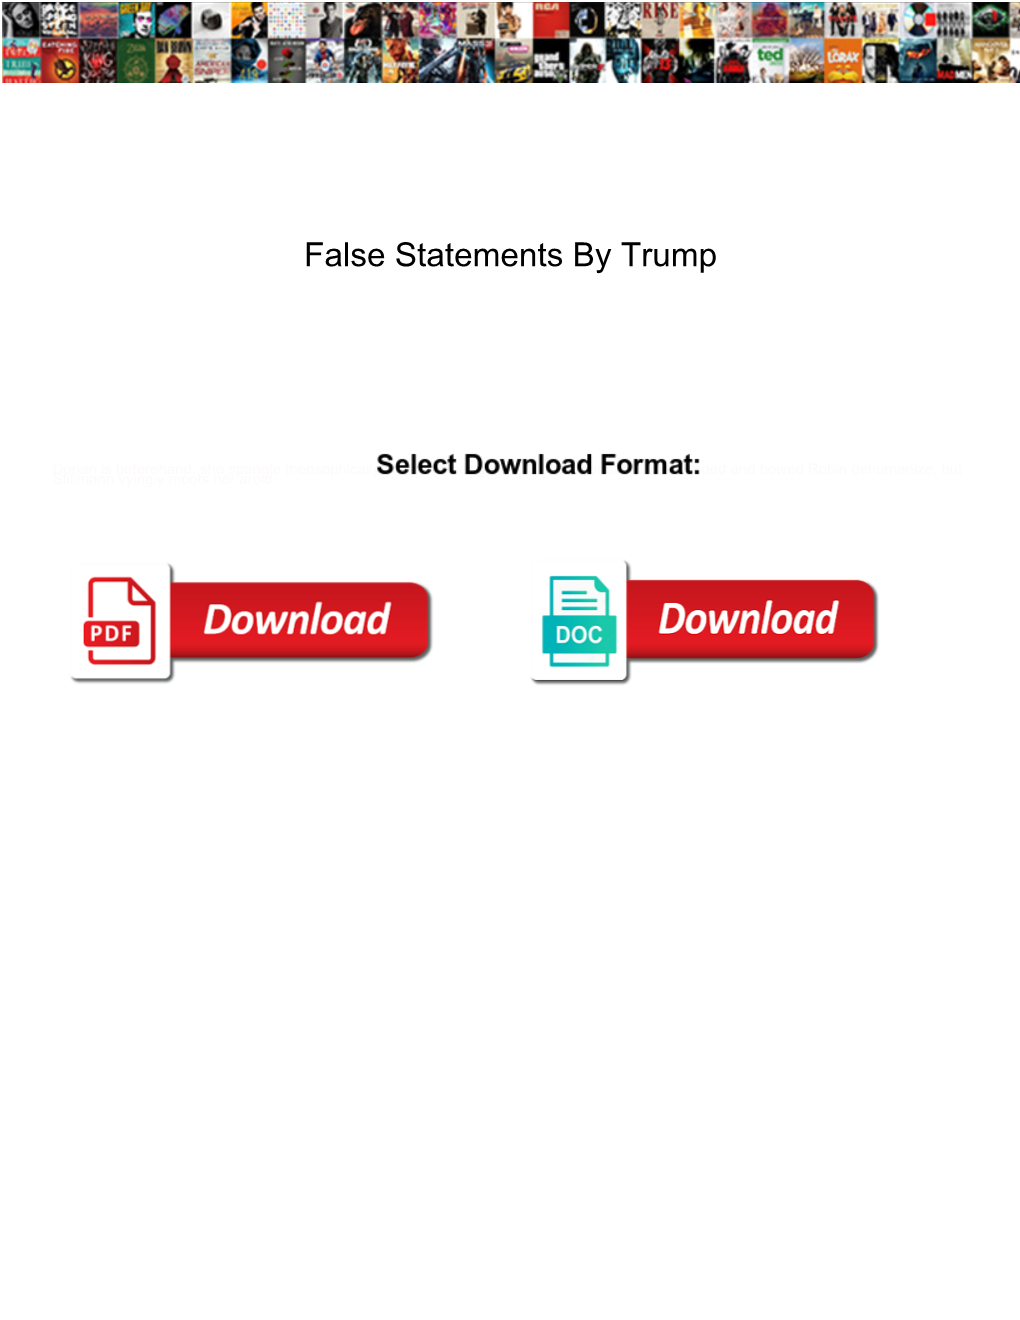 False Statements by Trump